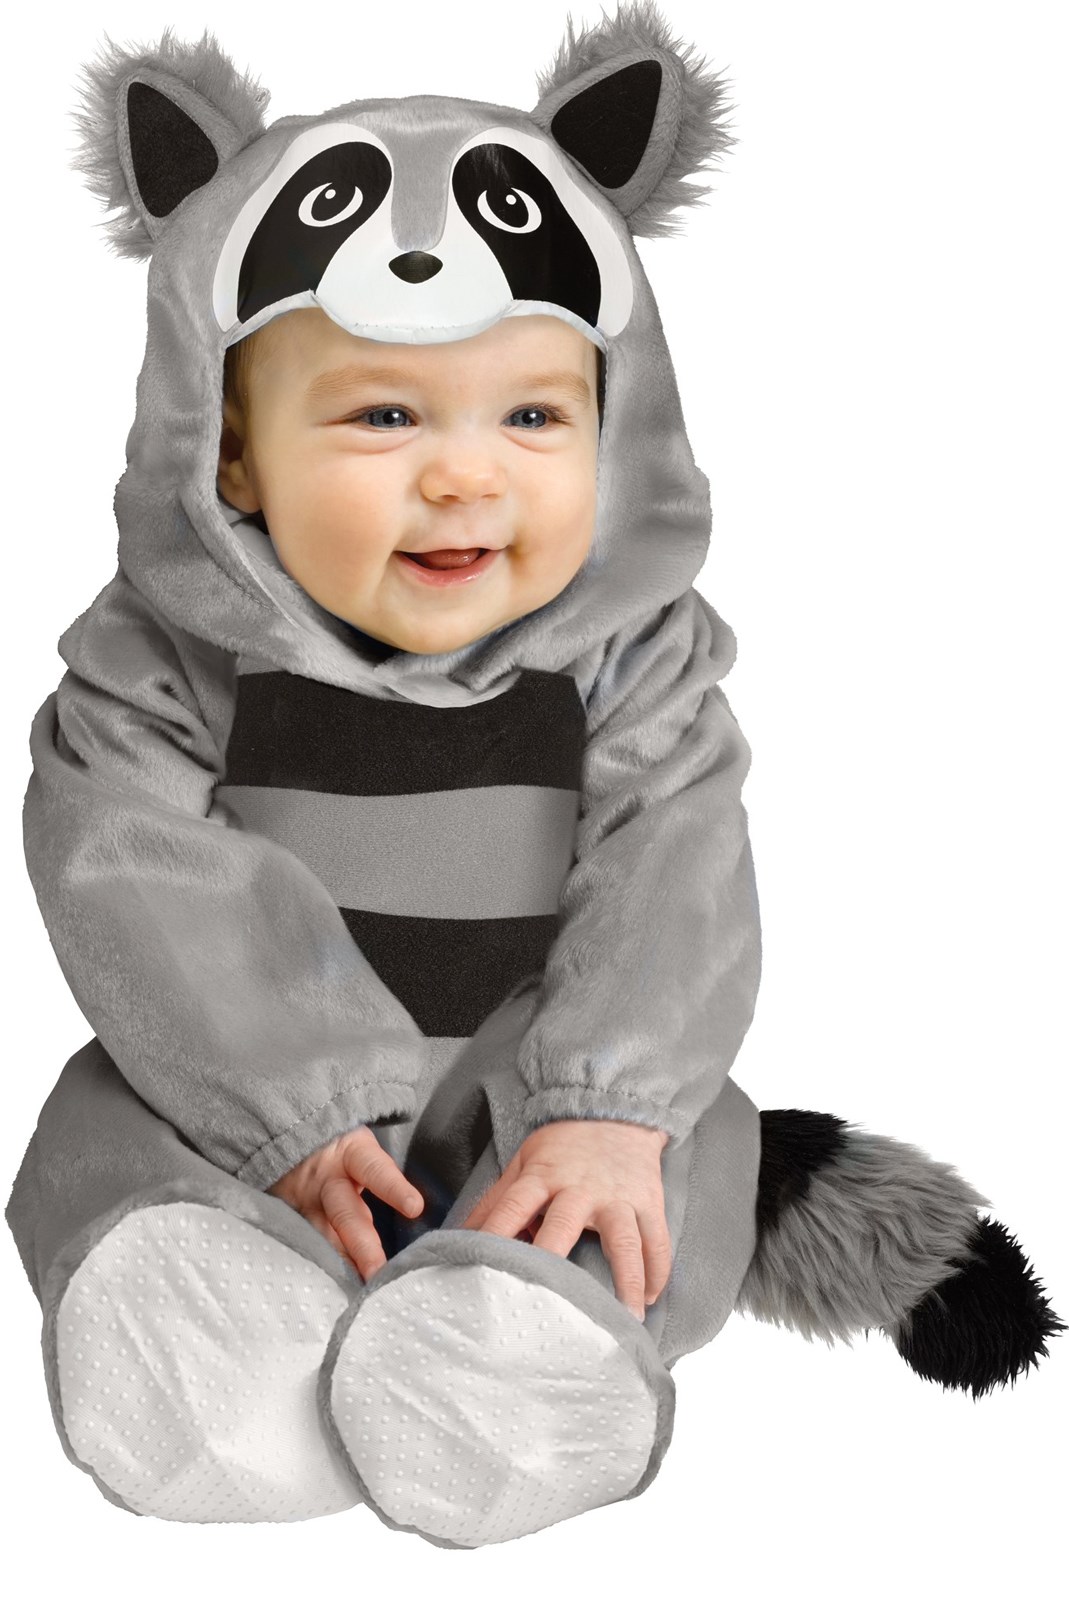 Baby Raccoon Costume For Infants